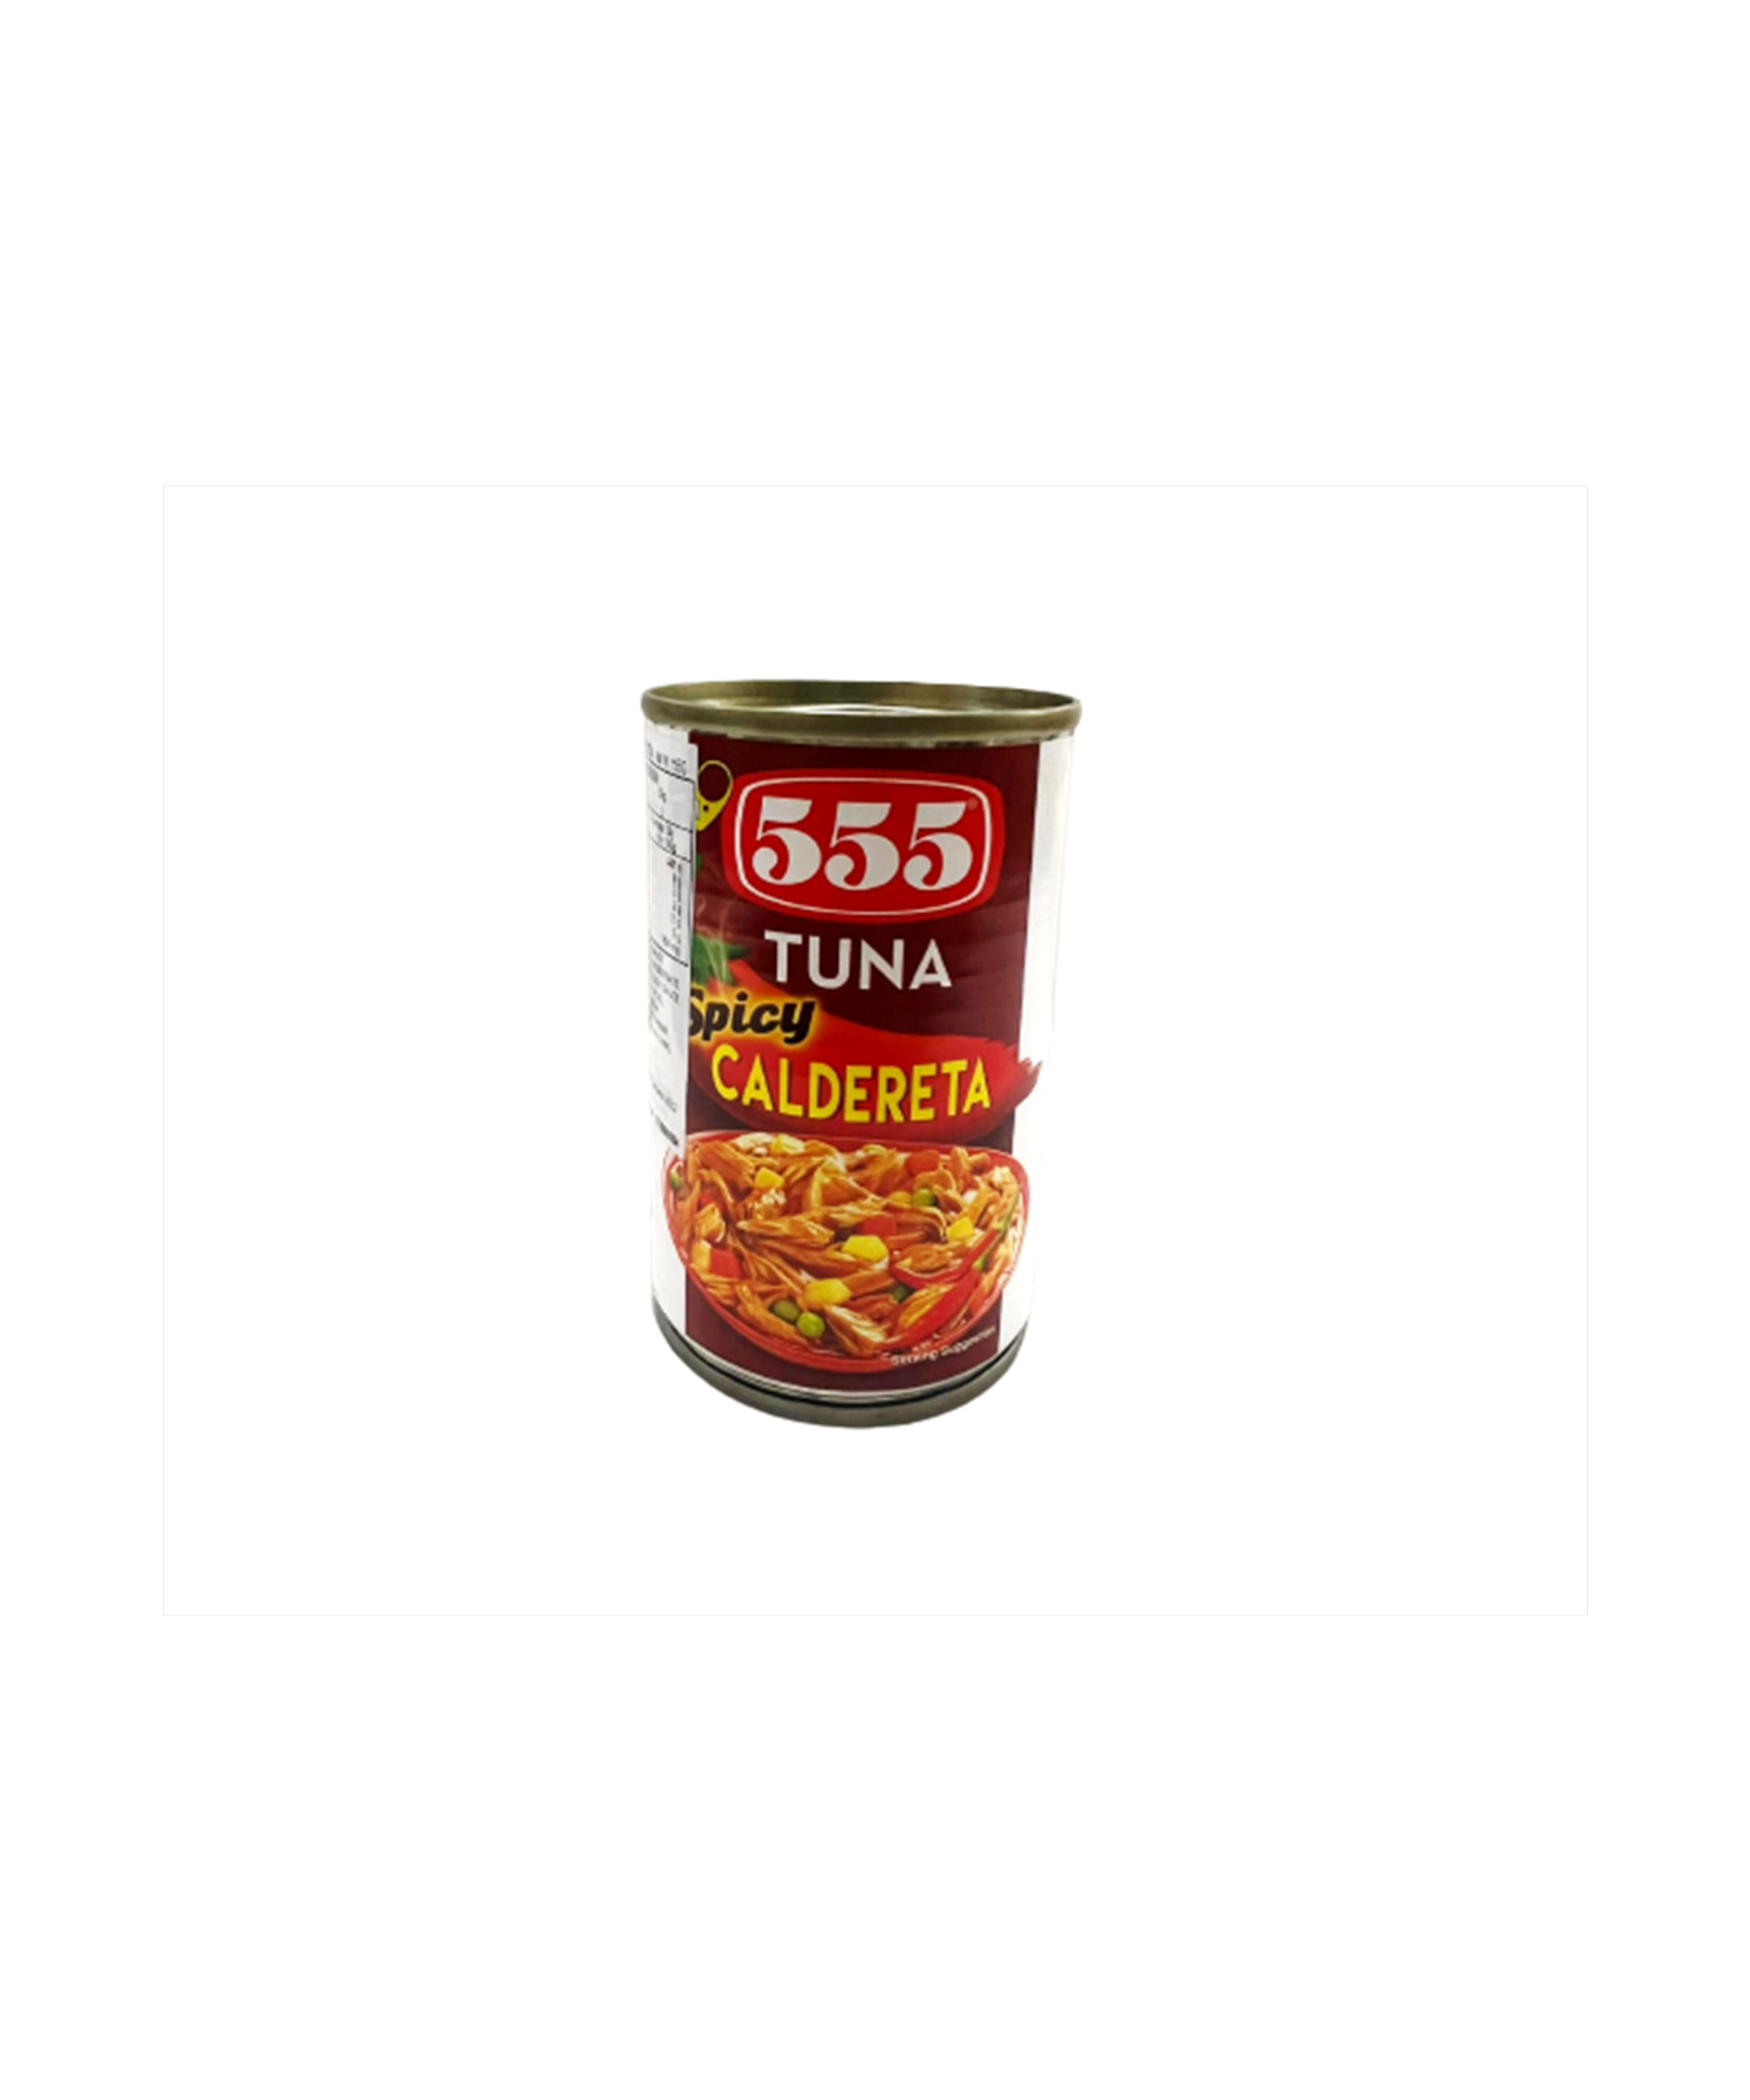 555 Tuna Spicy Caldereta  155g